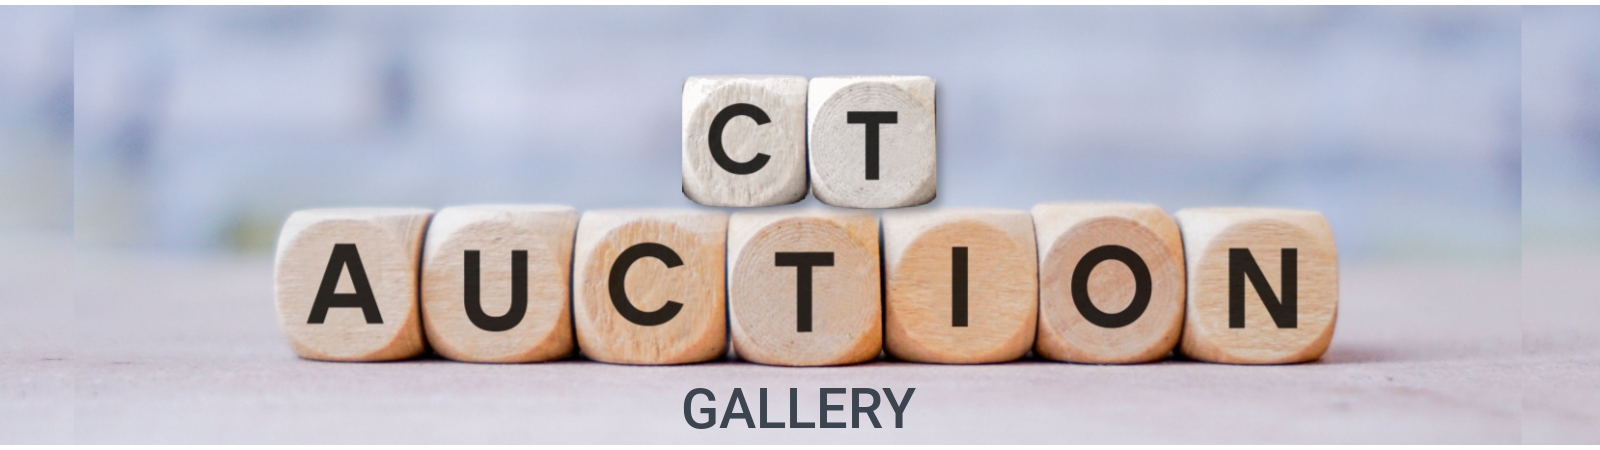 CT Auction Gallery | AuctionNinja